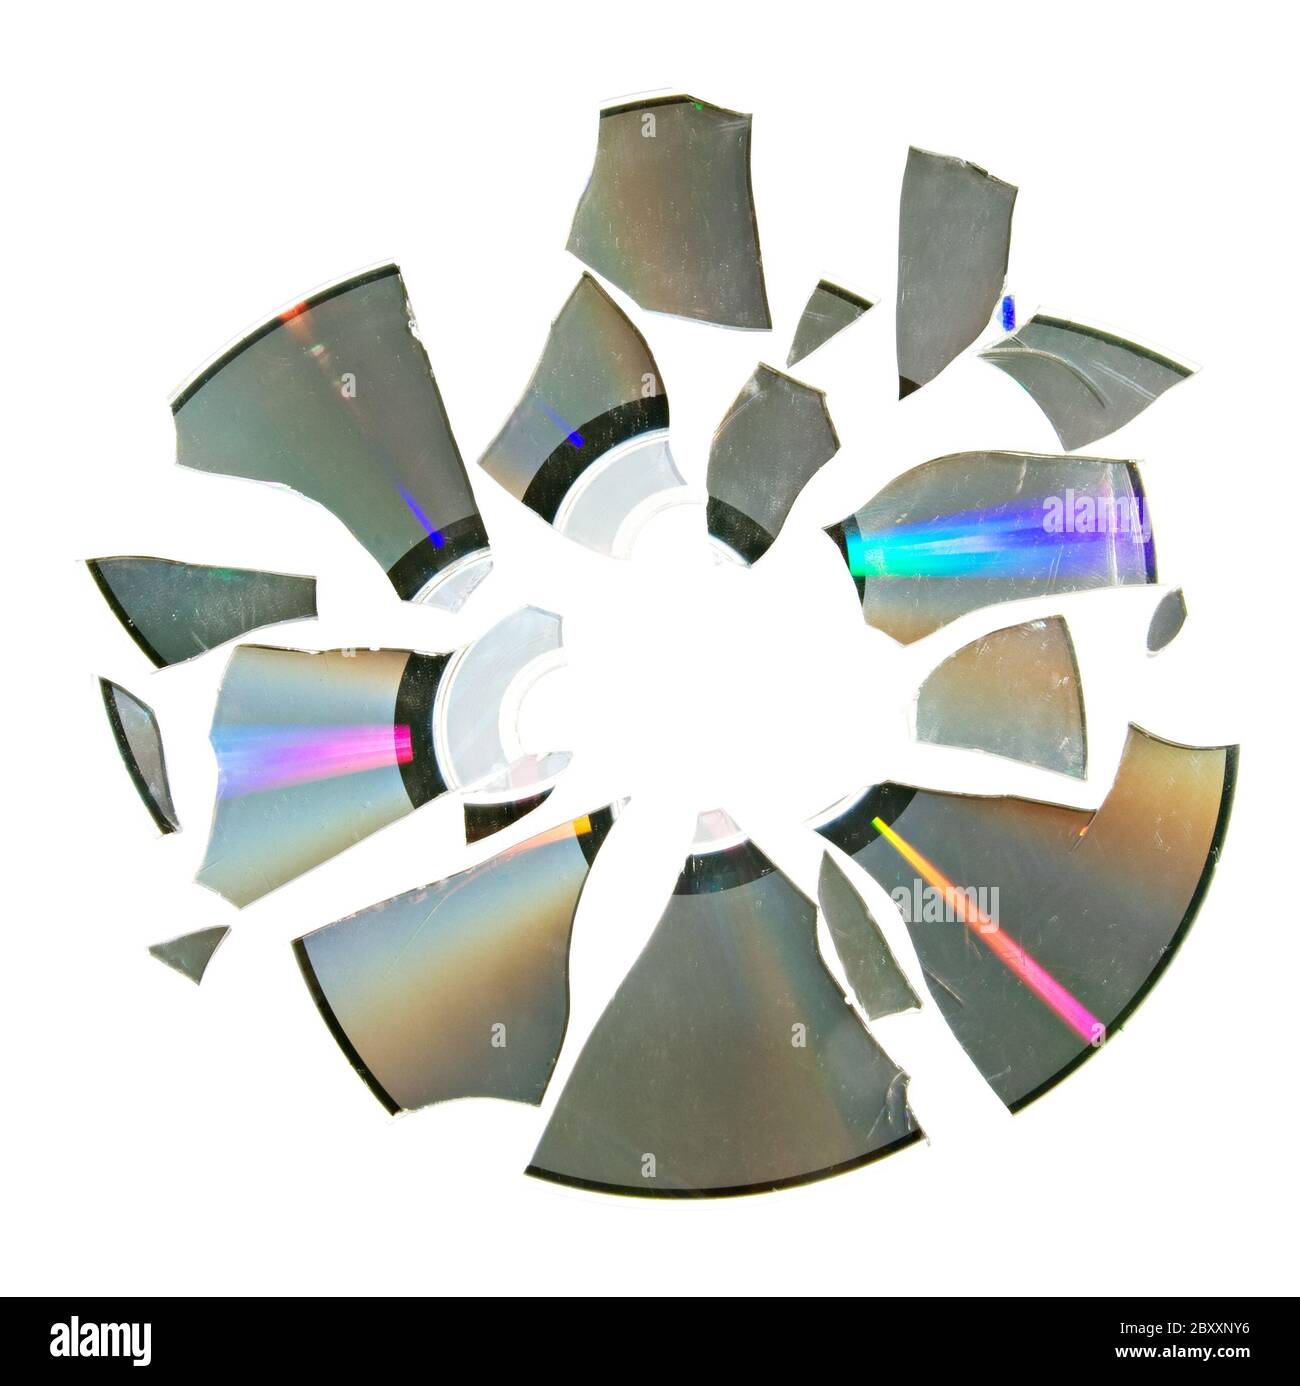 The compact disk broken into small pieces Stock Photo